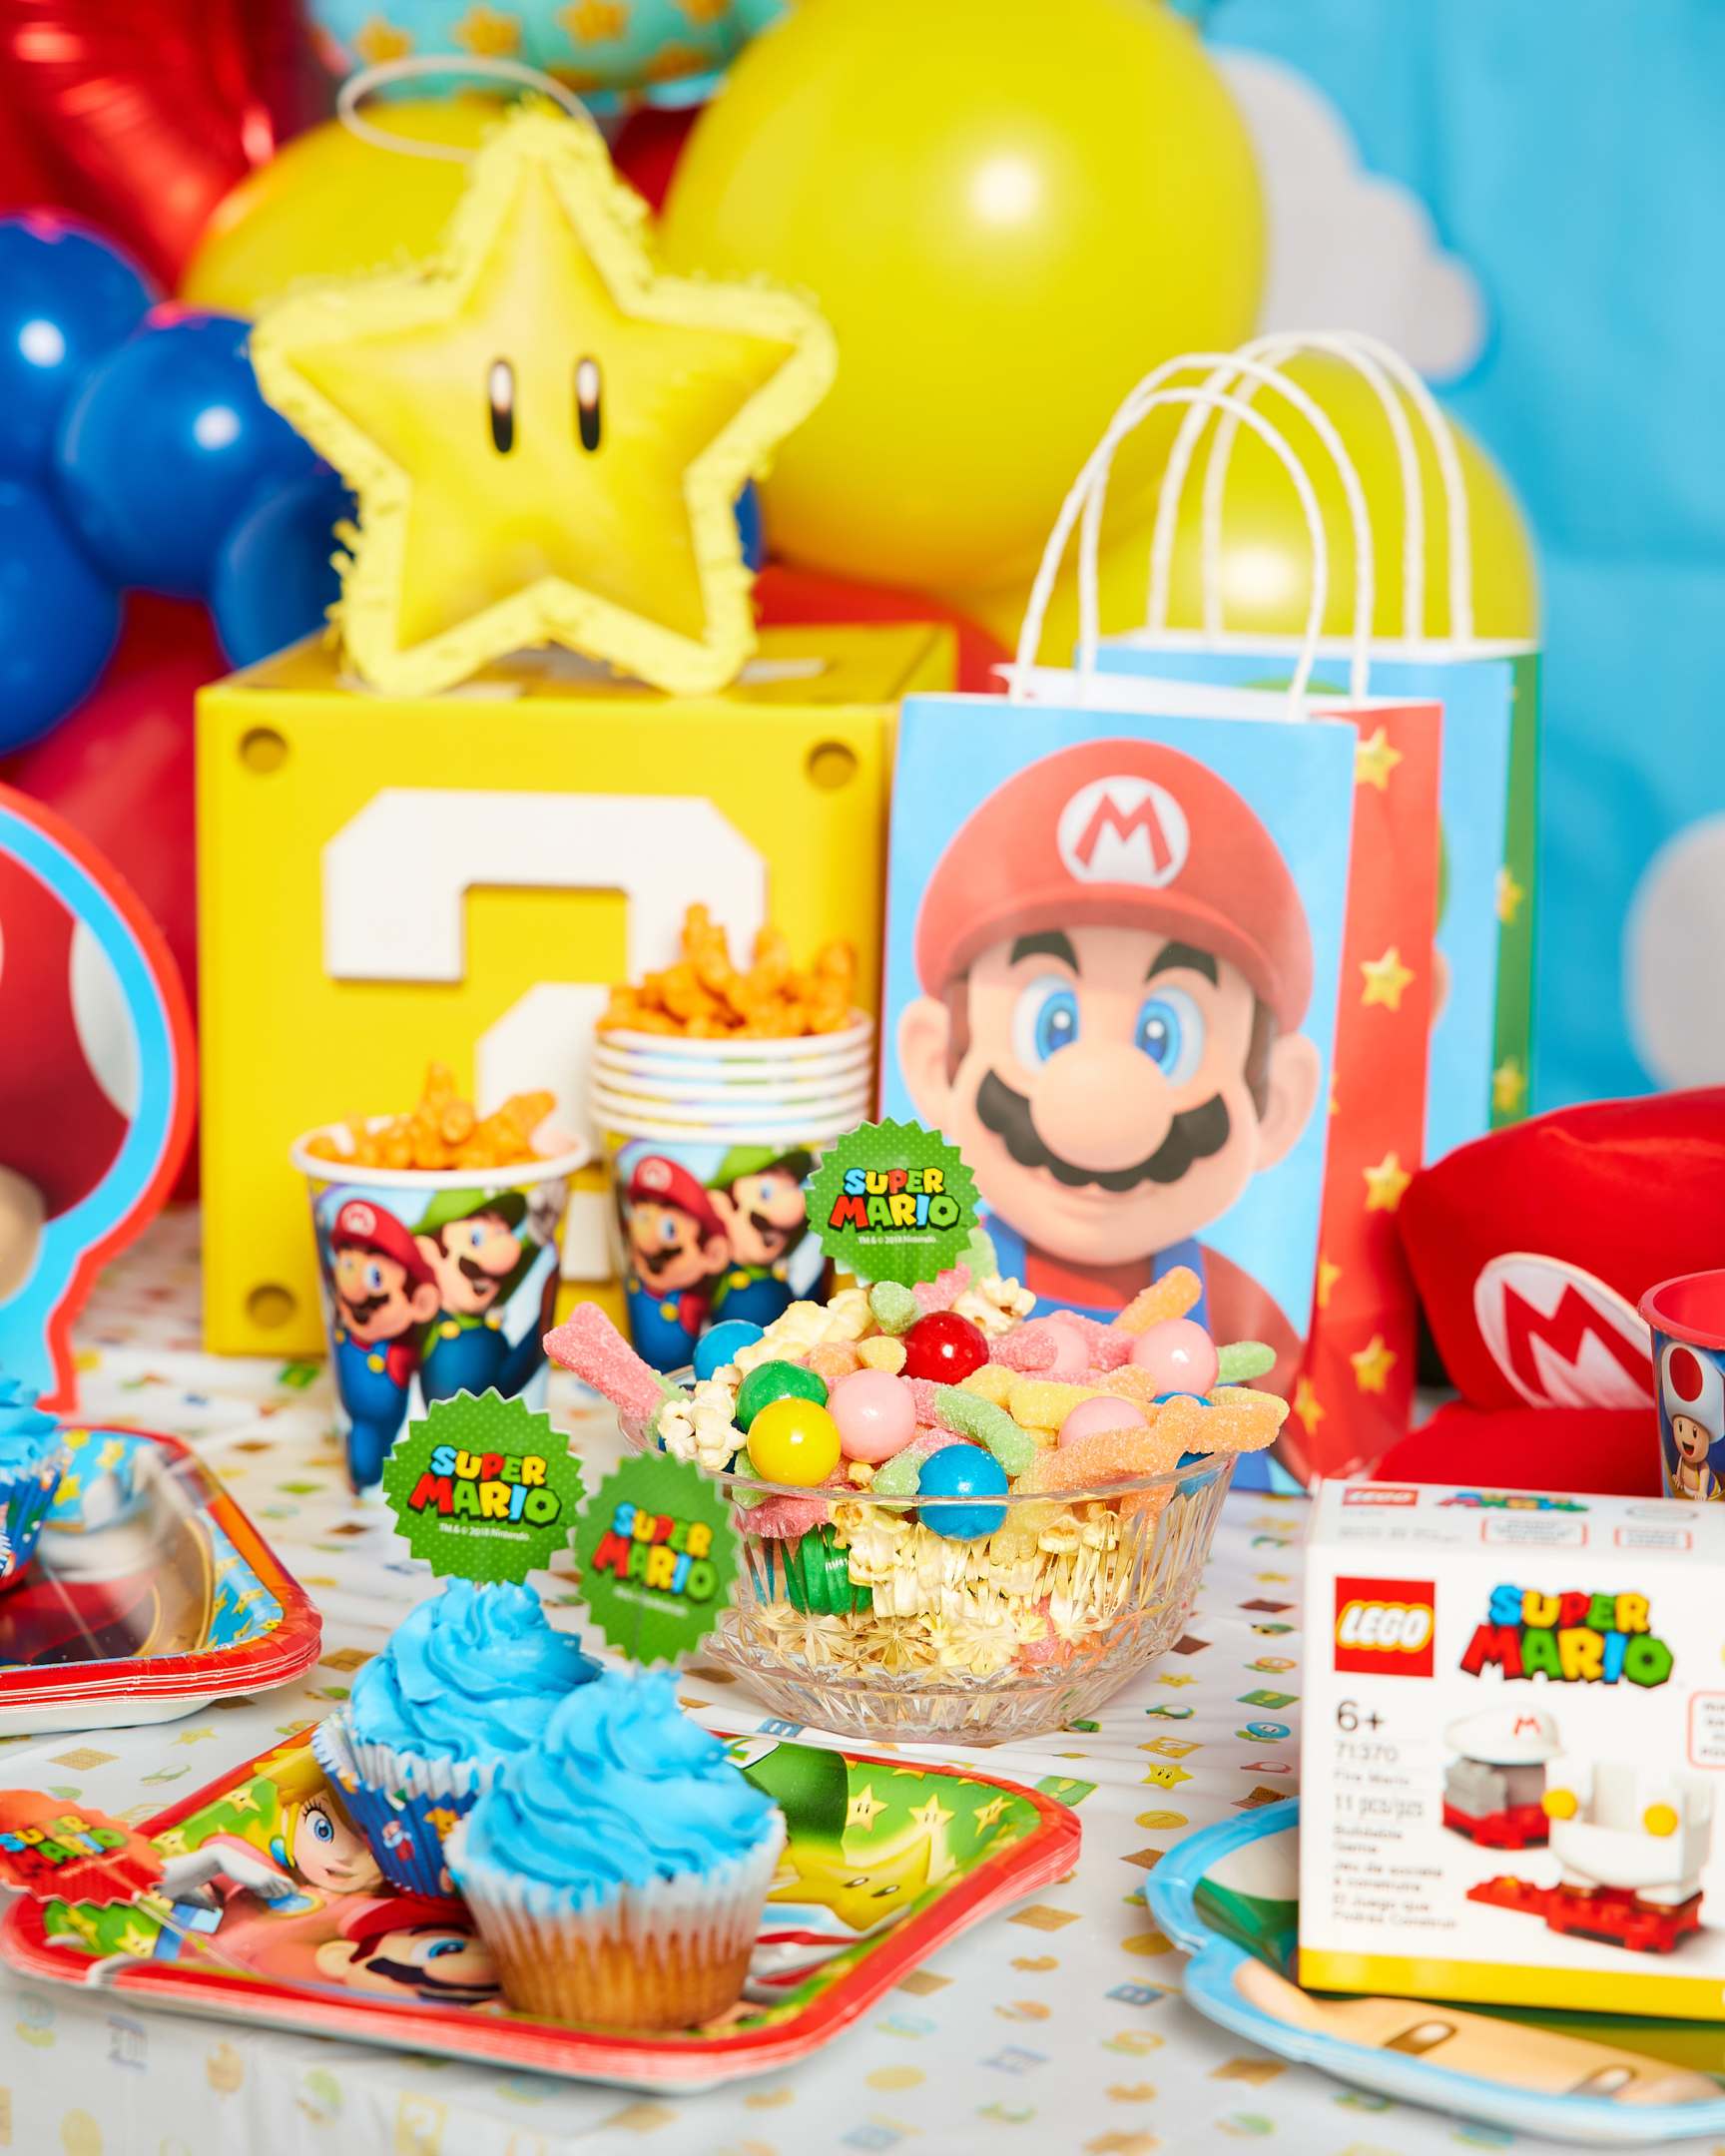 Super Mario Bros. party supplies and pinata.